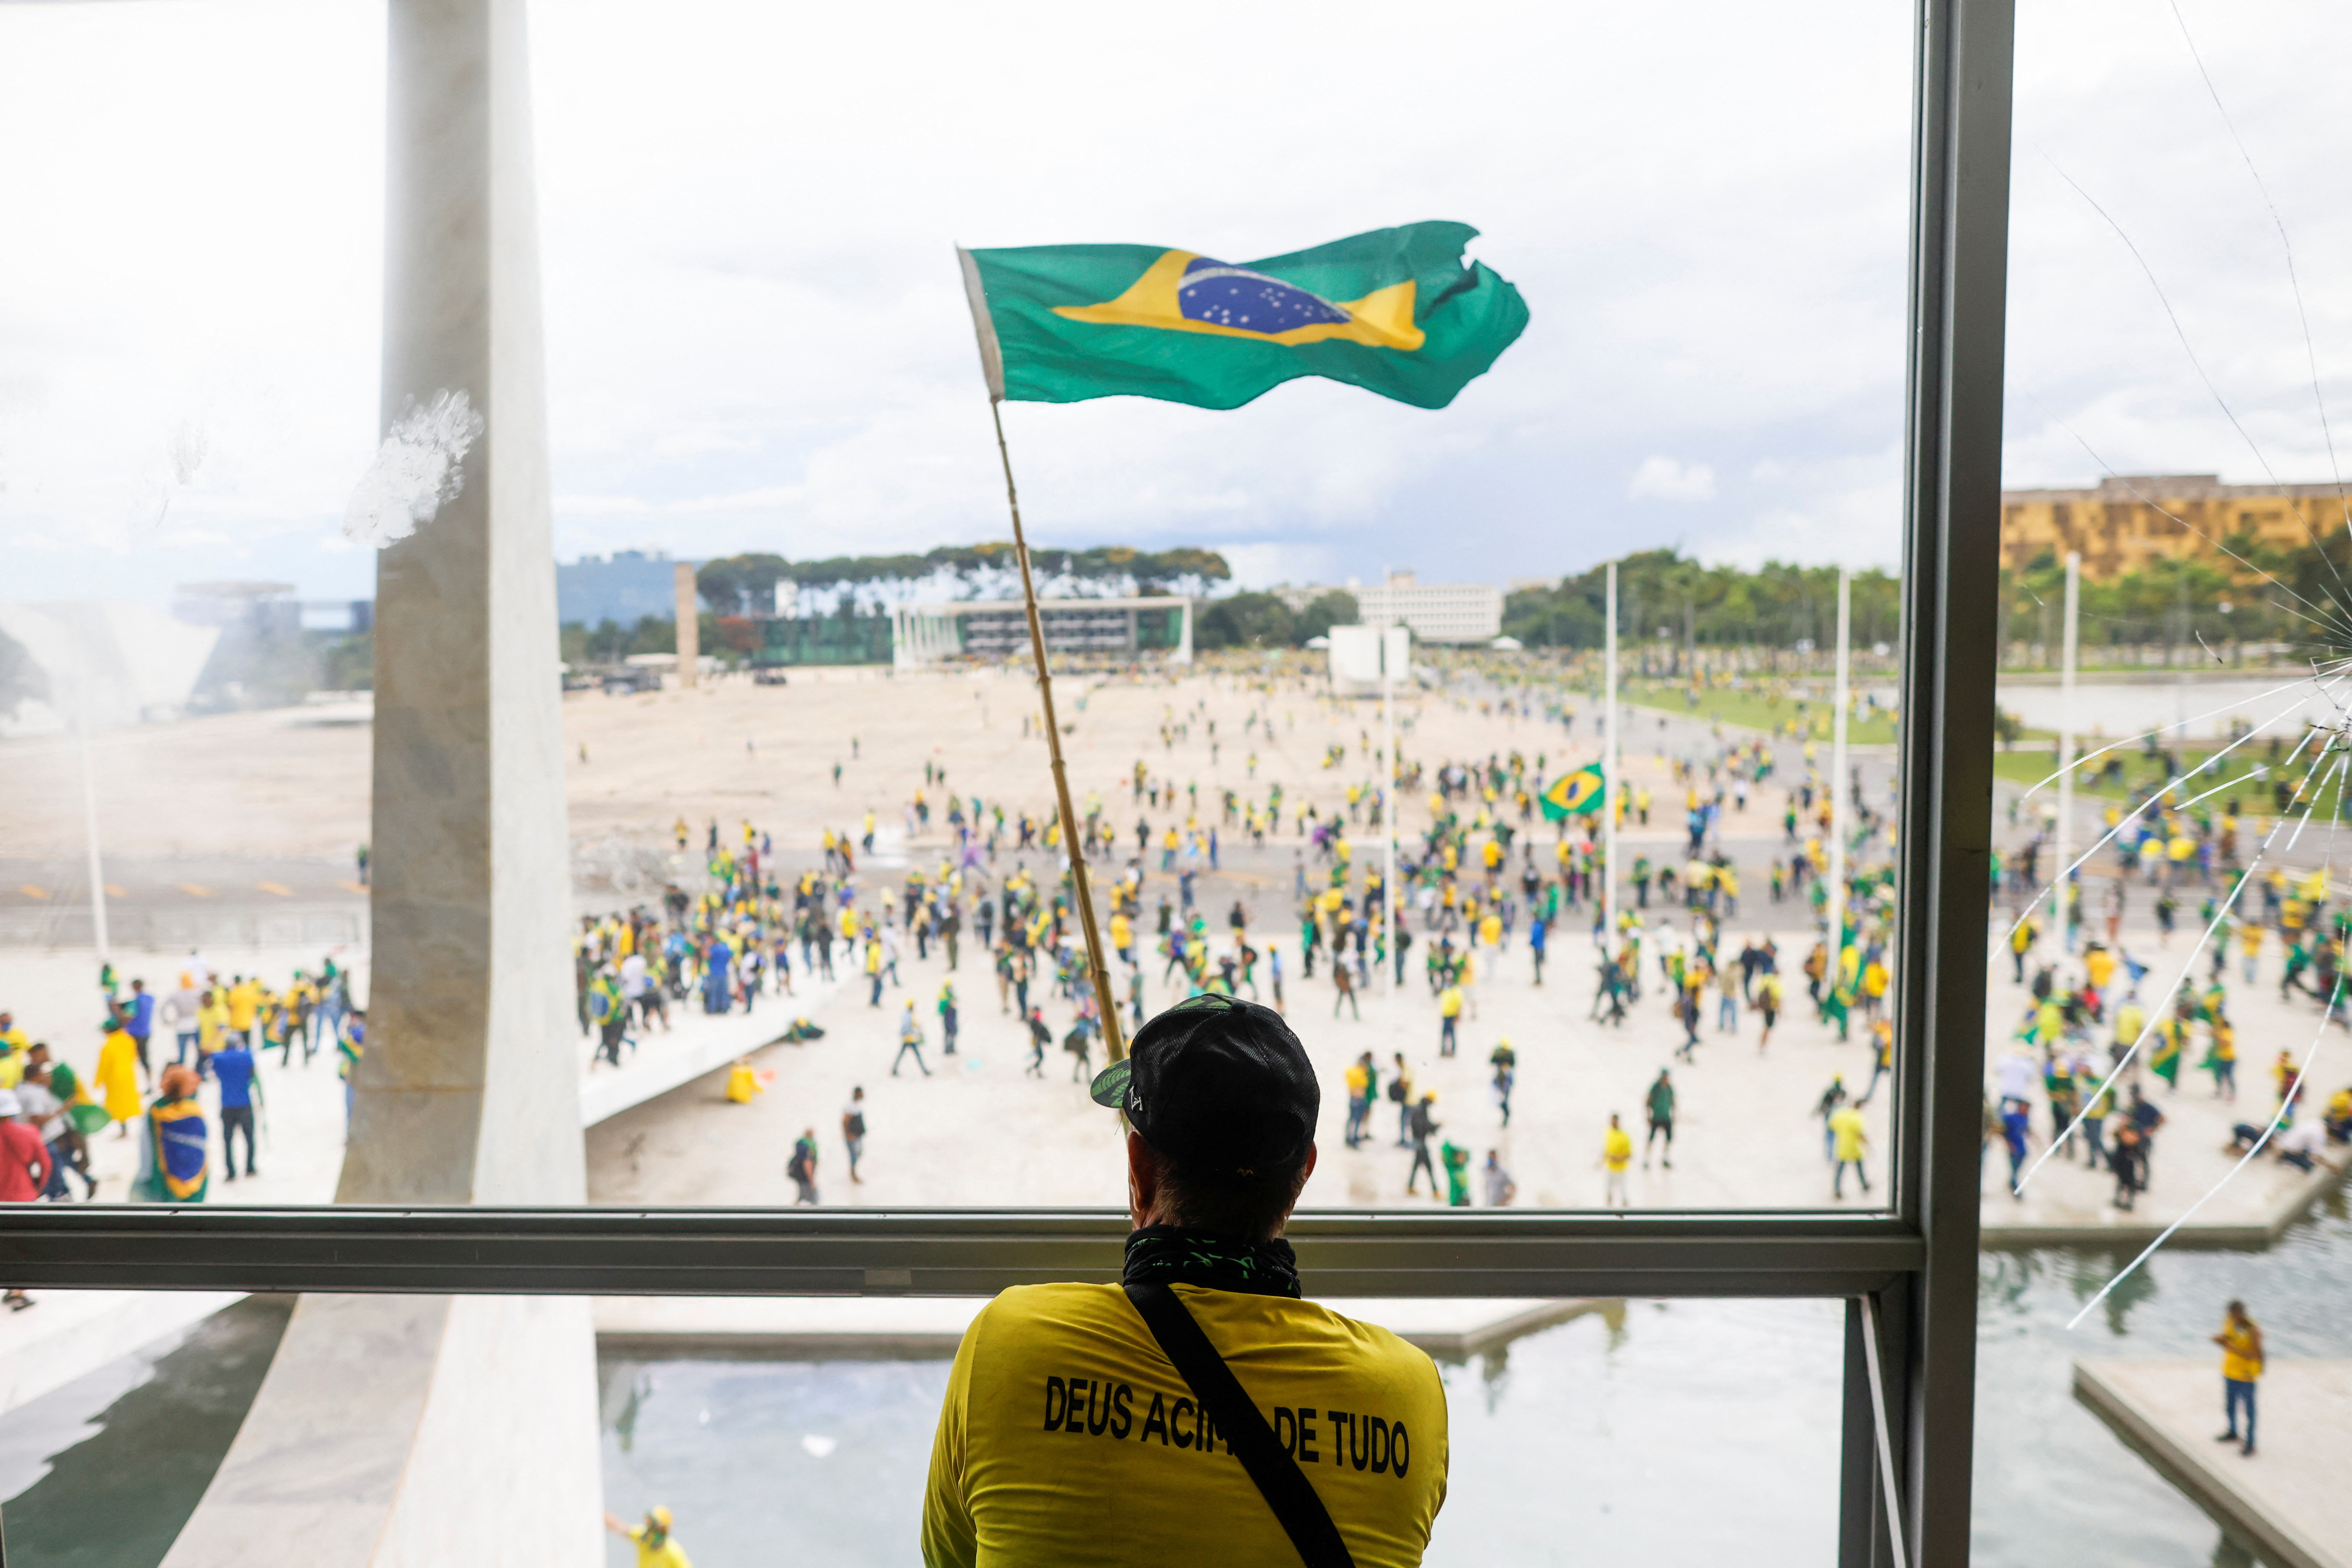 A man waves Brazil's flag as supporters of Brazil's former President Jair Bolsonaro demonstrate against President Luiz Inácio Lula da Silva, outside Brazil’s National Congress in Brasília, Brazil on Sunday.